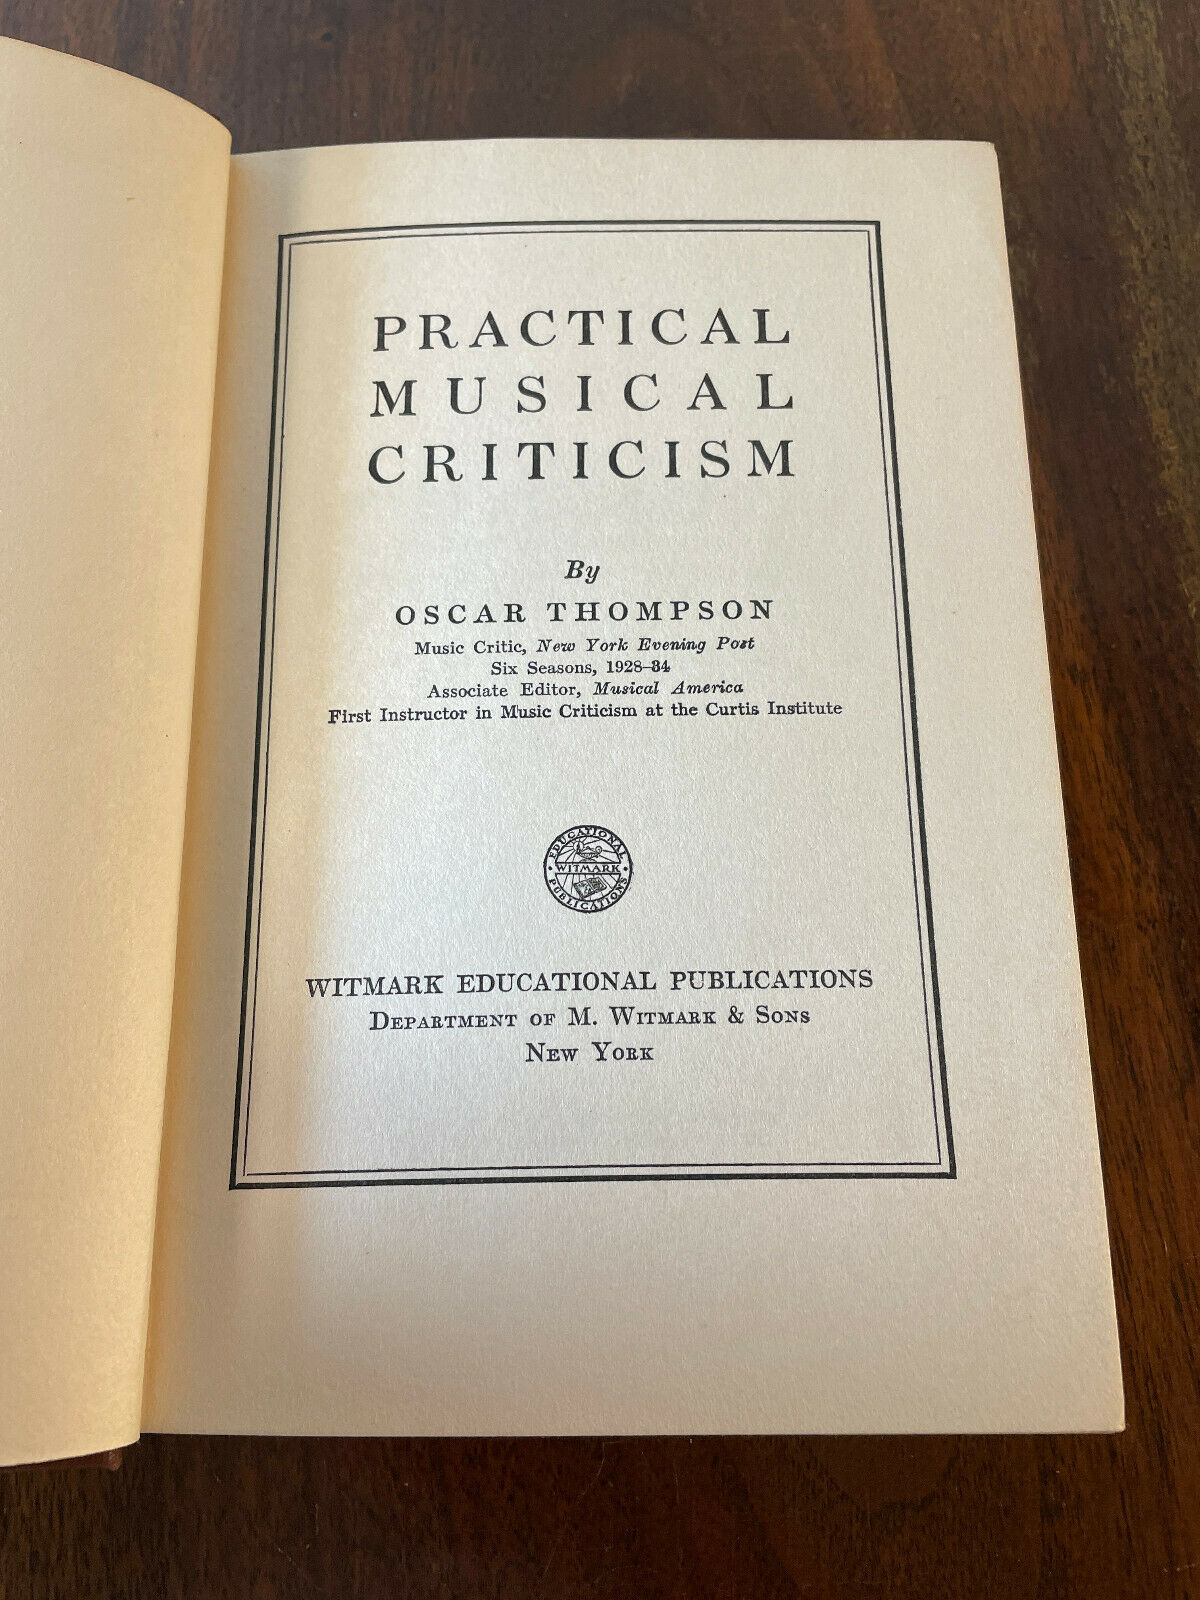 Practical Musical Criticism by Oscar Thompson (A3)